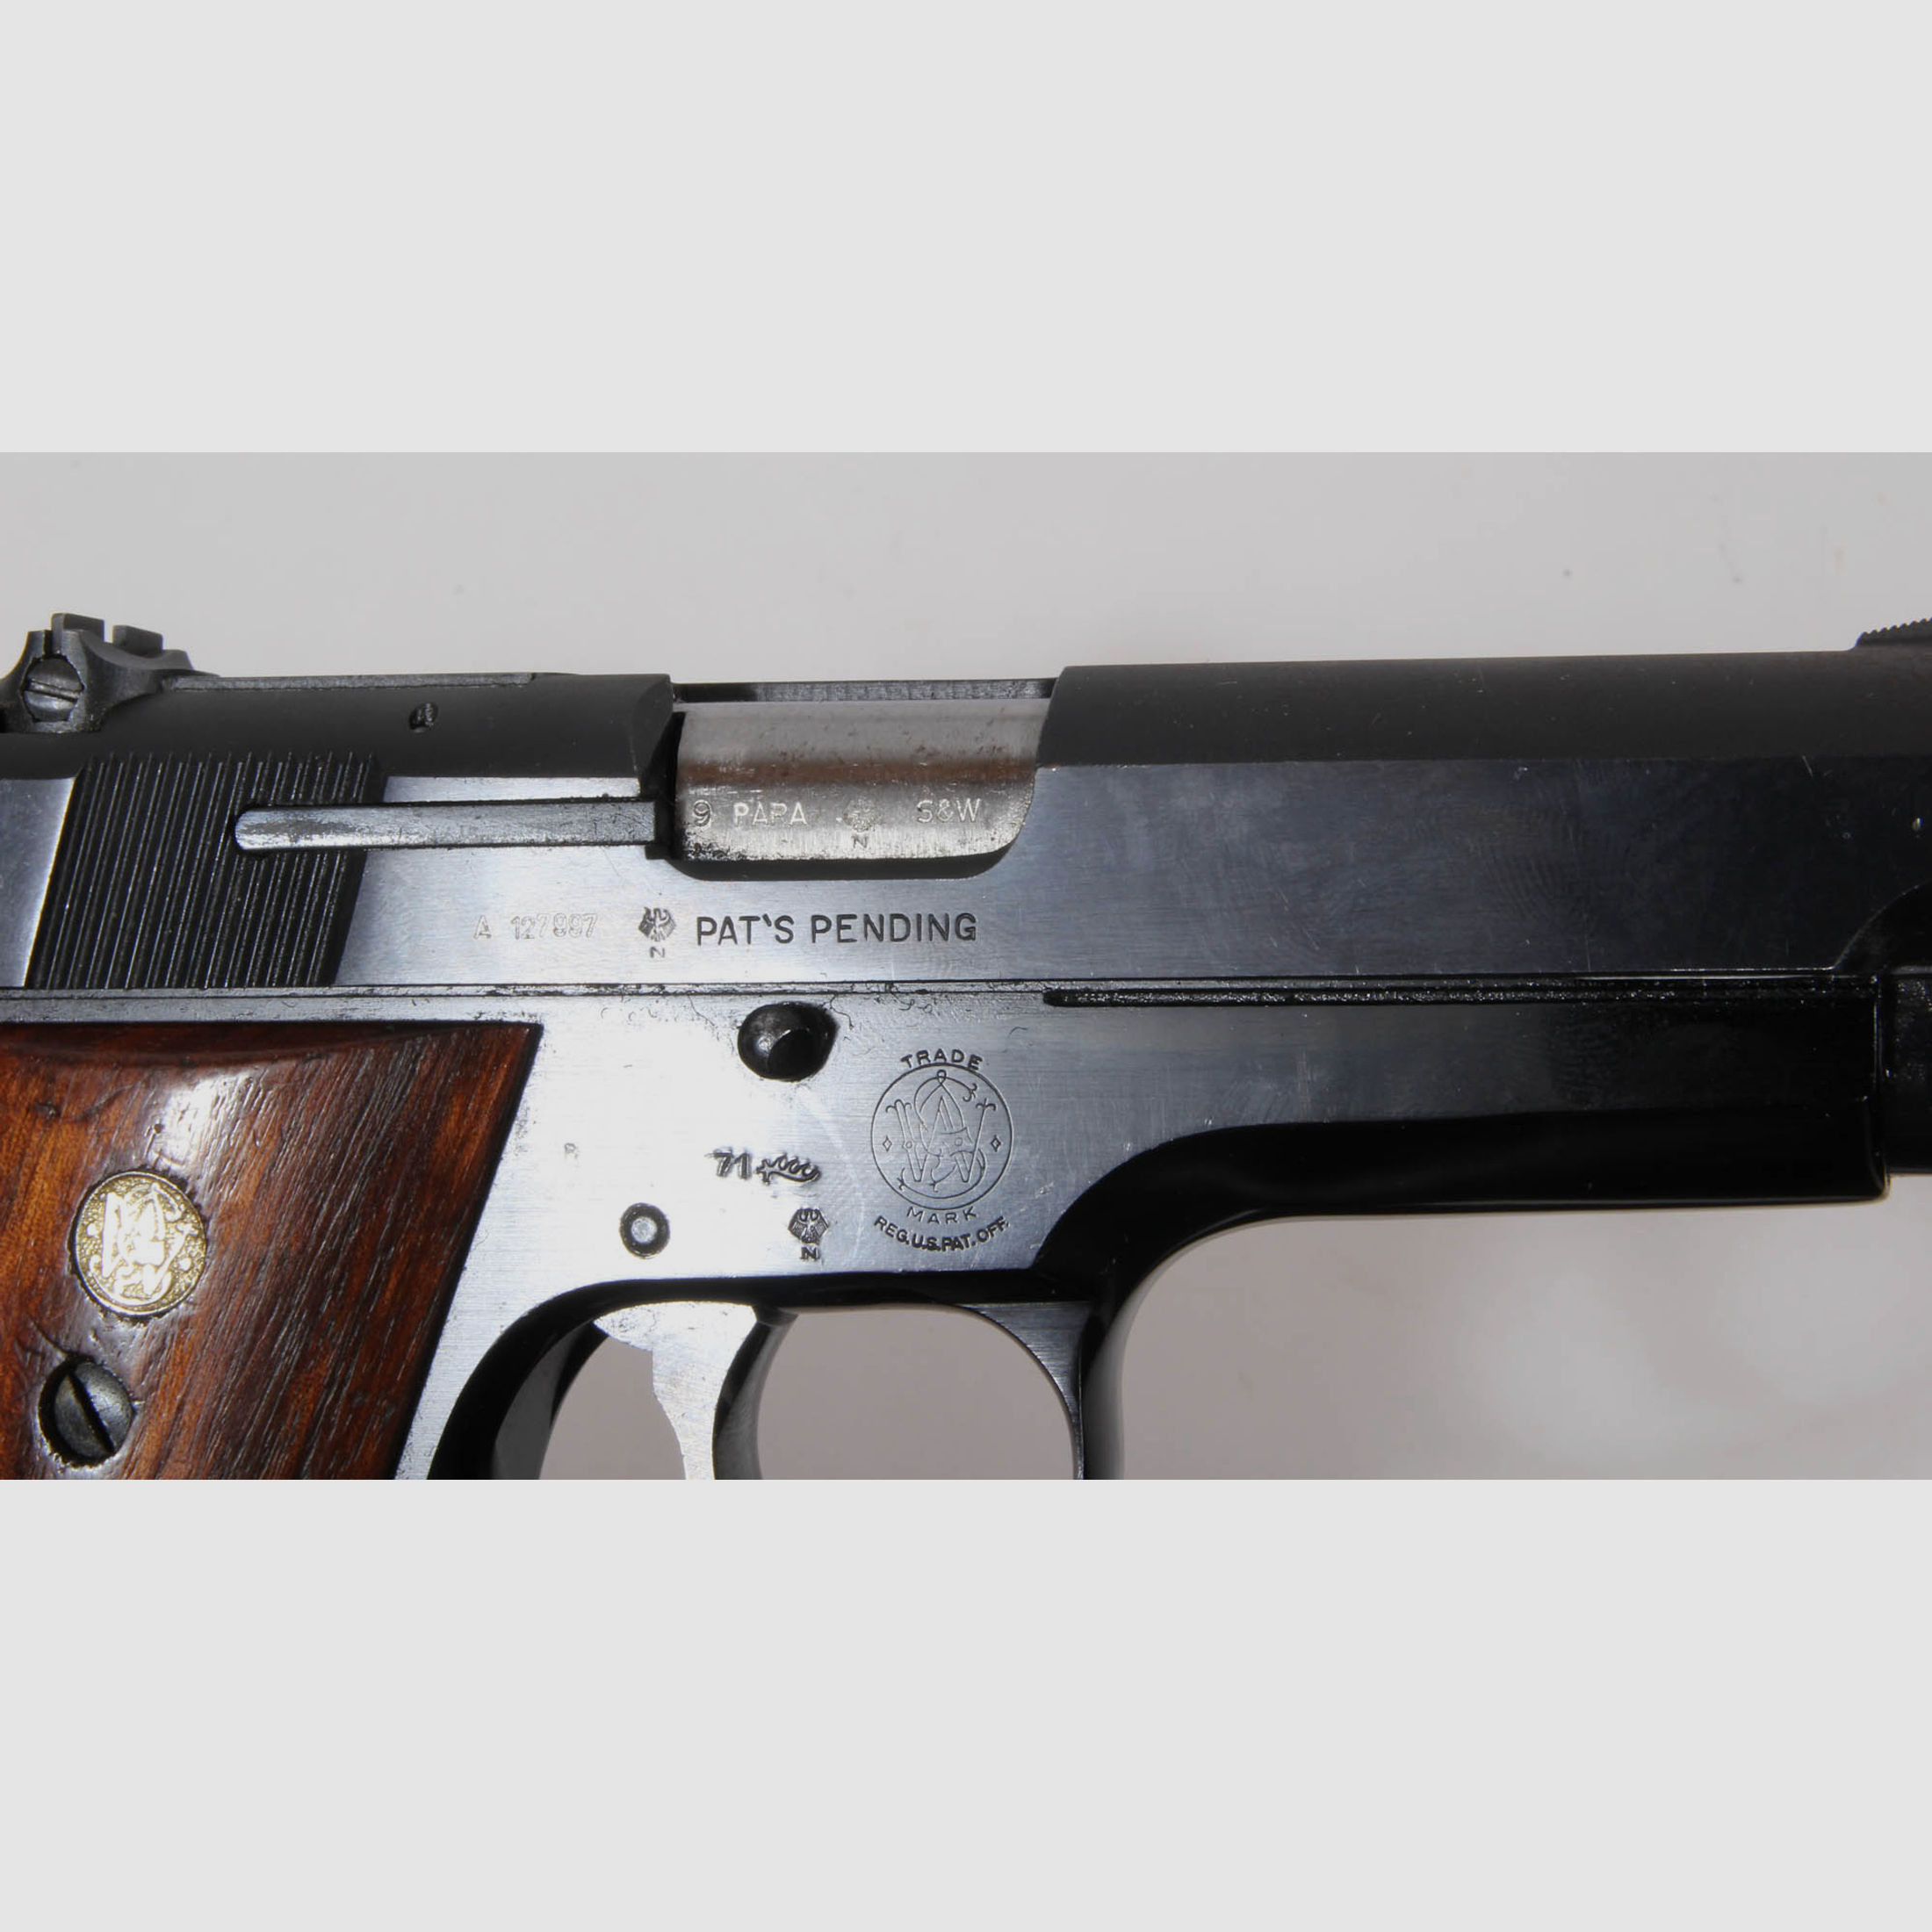 Pistole Smith & Wesson Mod. 39-2  Artikel 12836